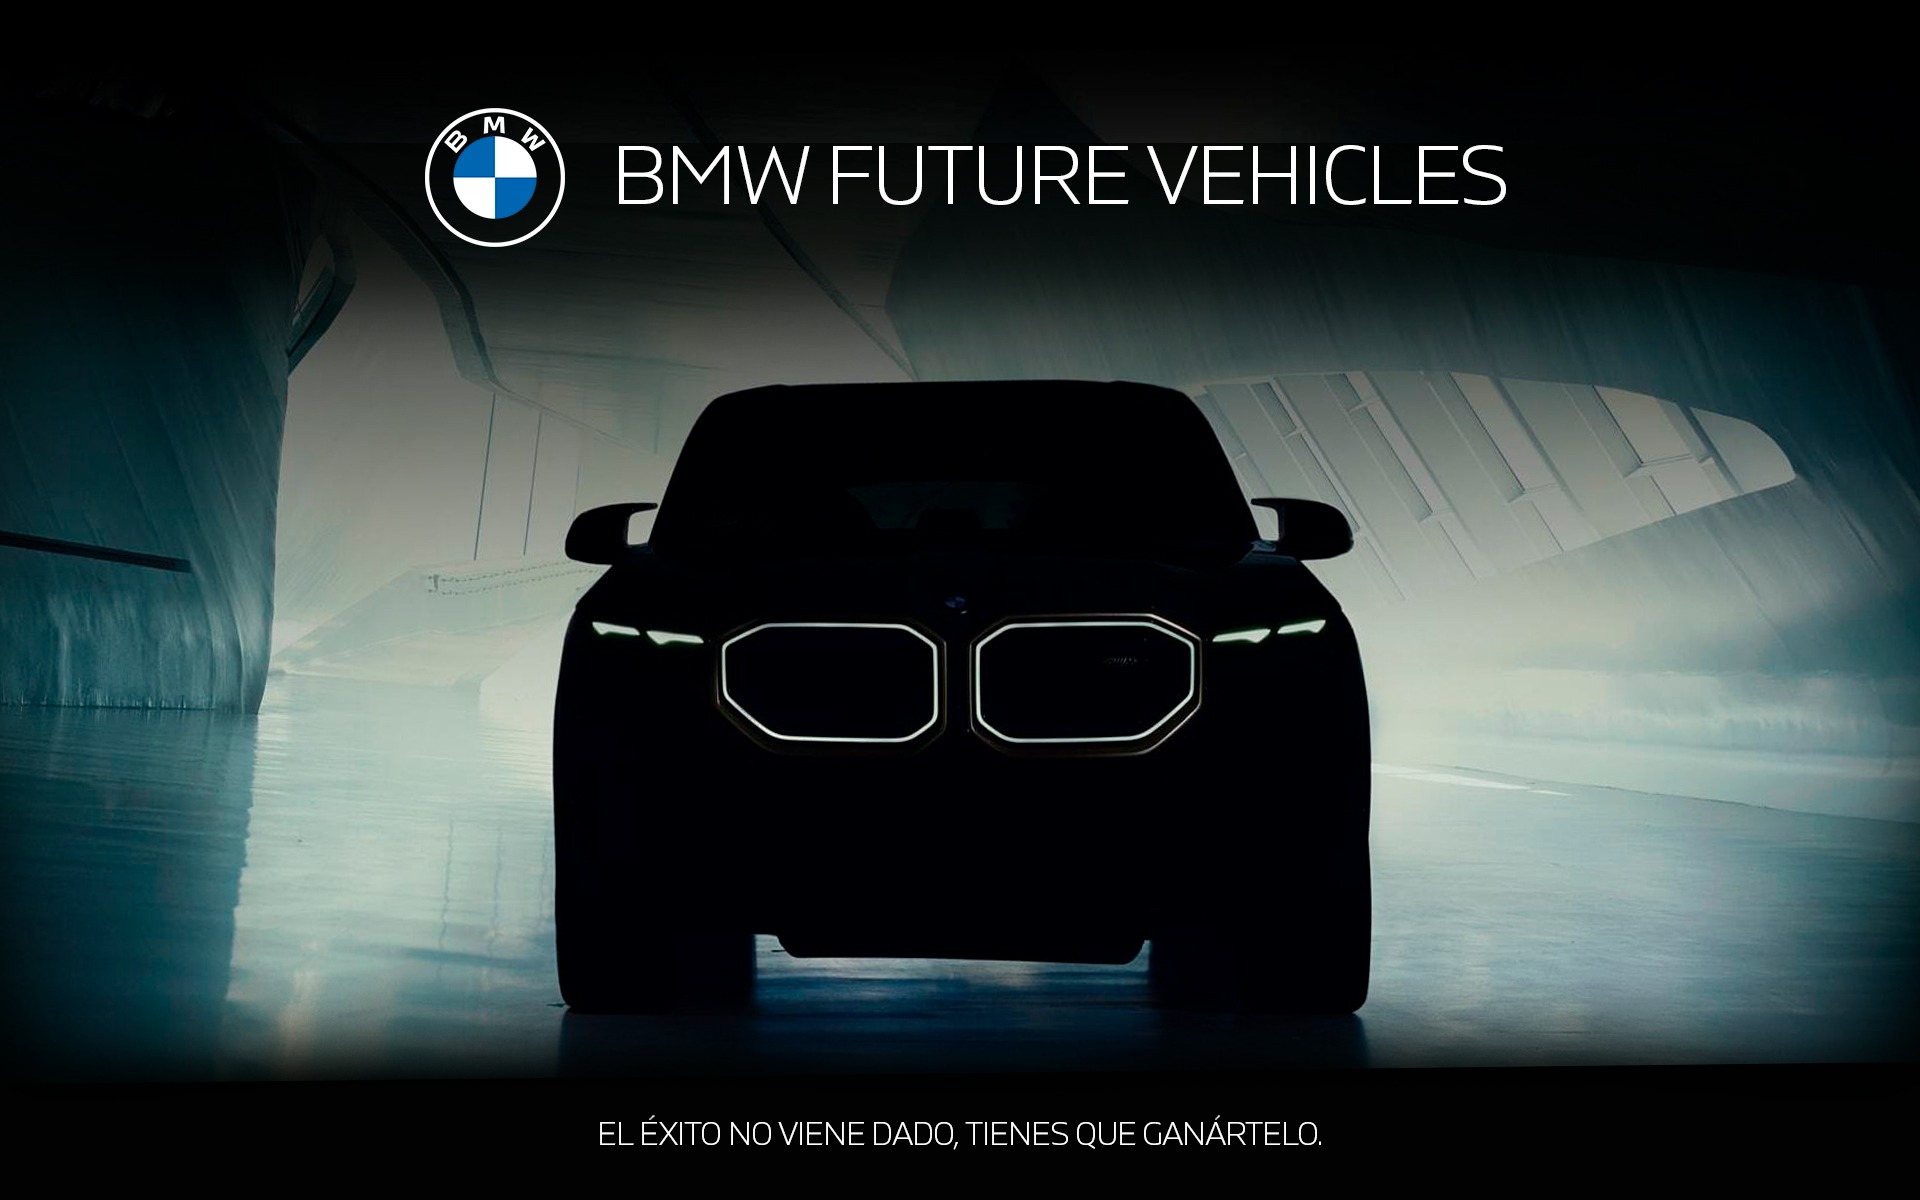 4 THE FUTURE VEHICLES BMW